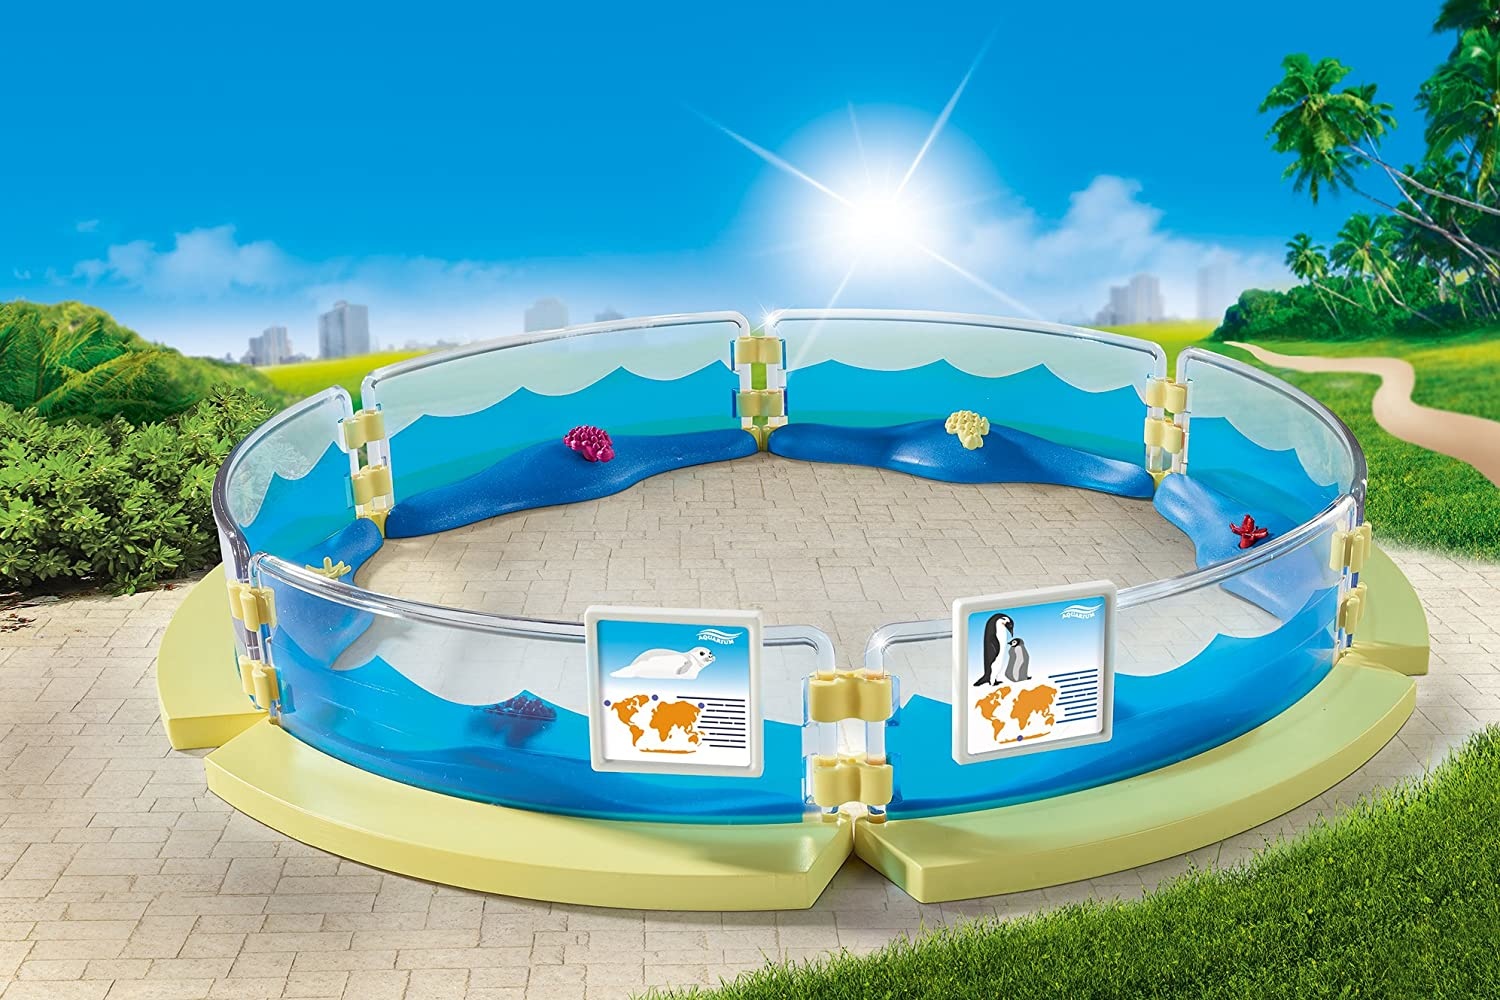 Playmobil Playmobil Family Fun 9063 - Enclos pour animaux marins